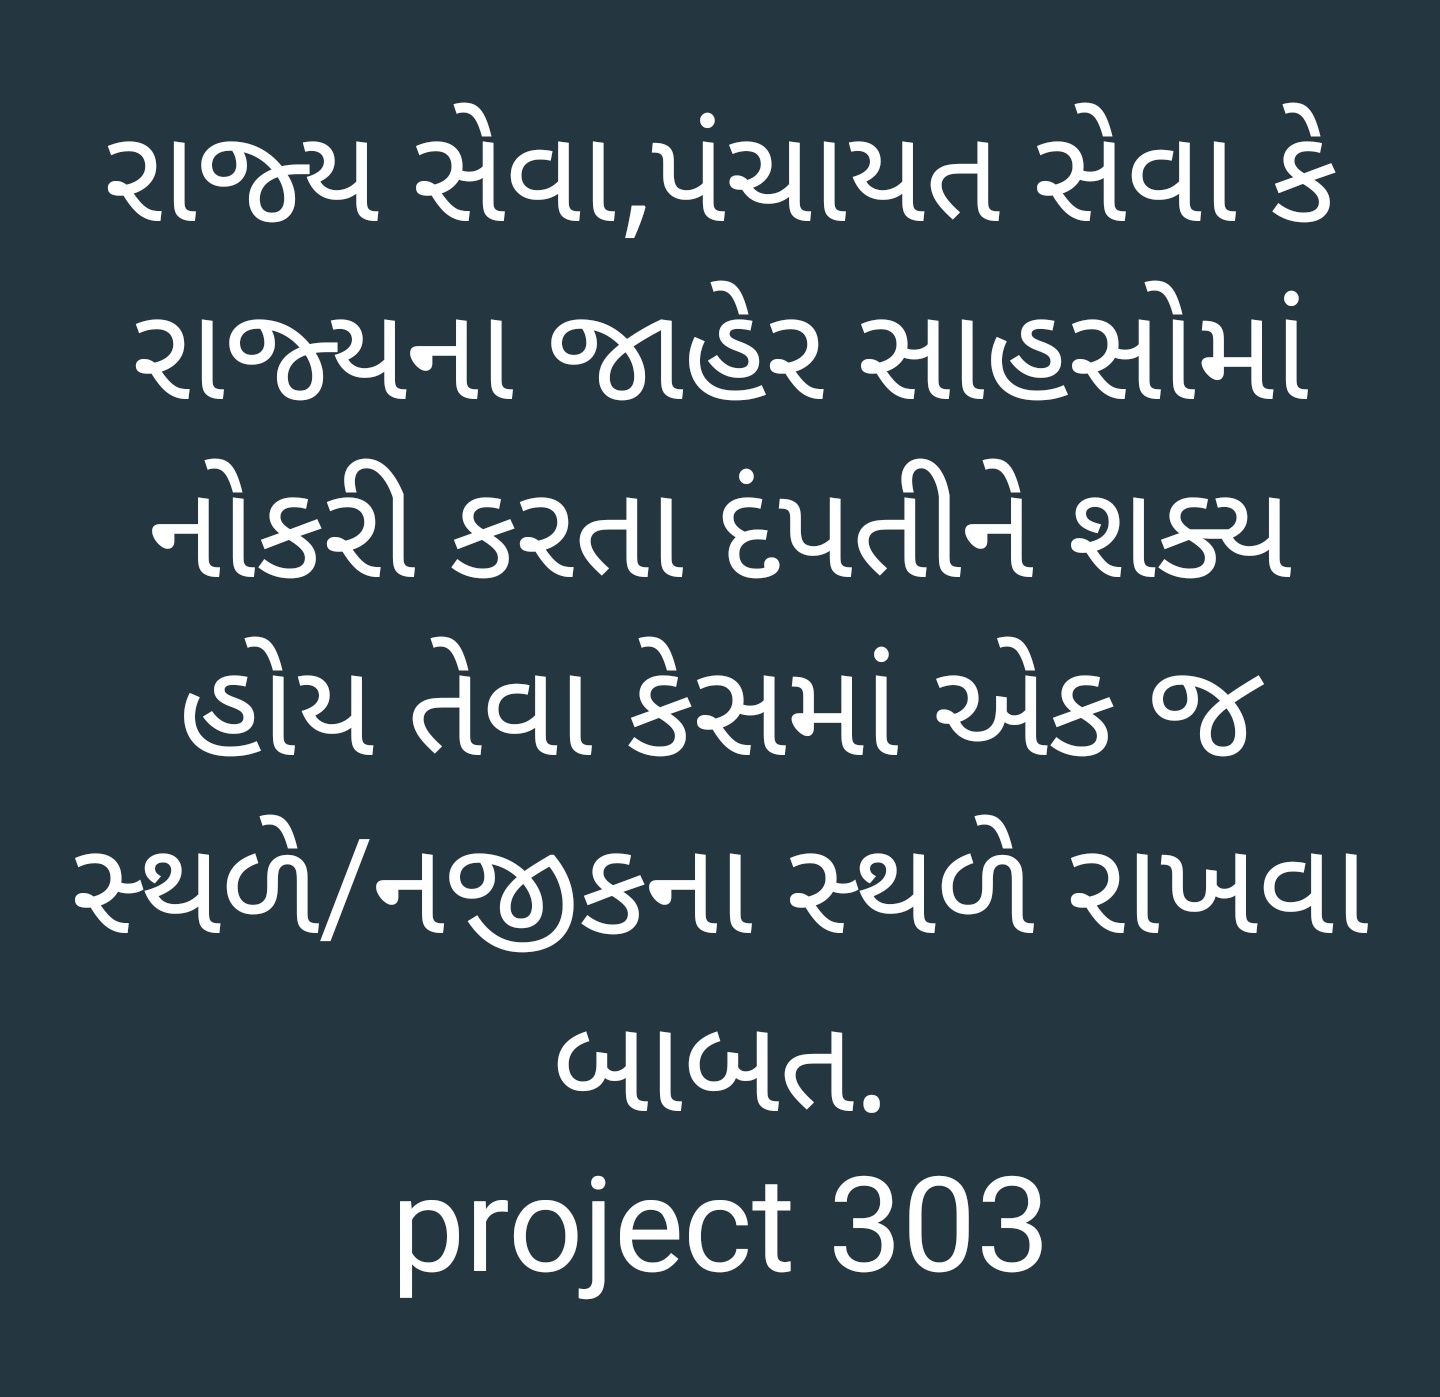 https://project303.blogspot.com/2021/11/dampatti-badli-niyam-22-11-2021.html